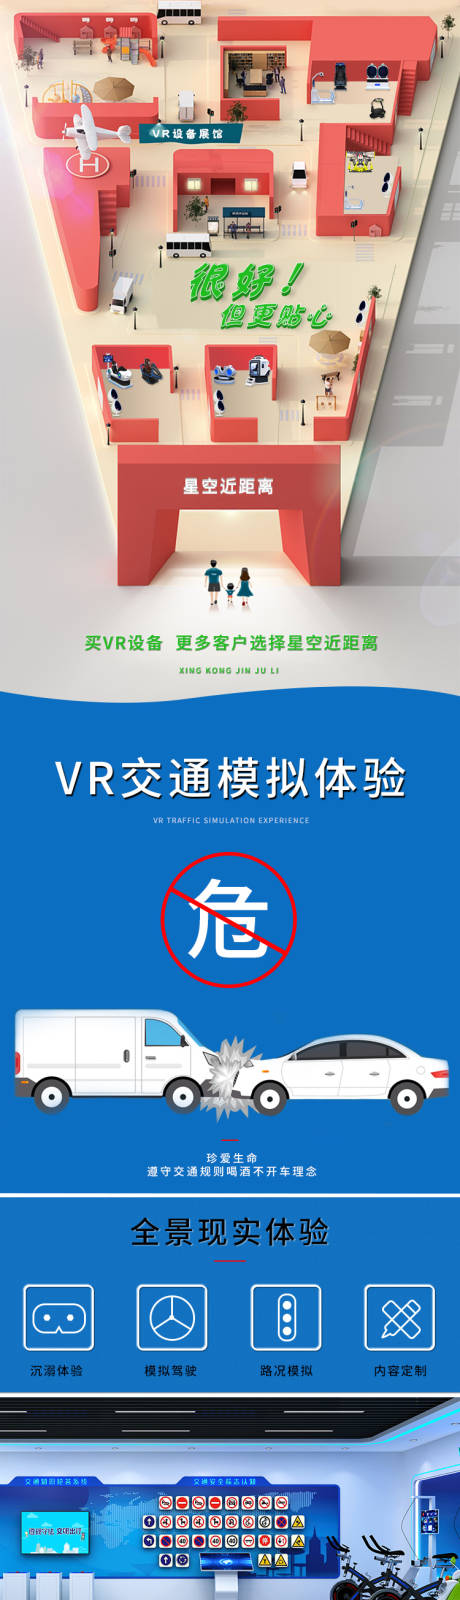 VR交通安全设备体验可定制VR展馆